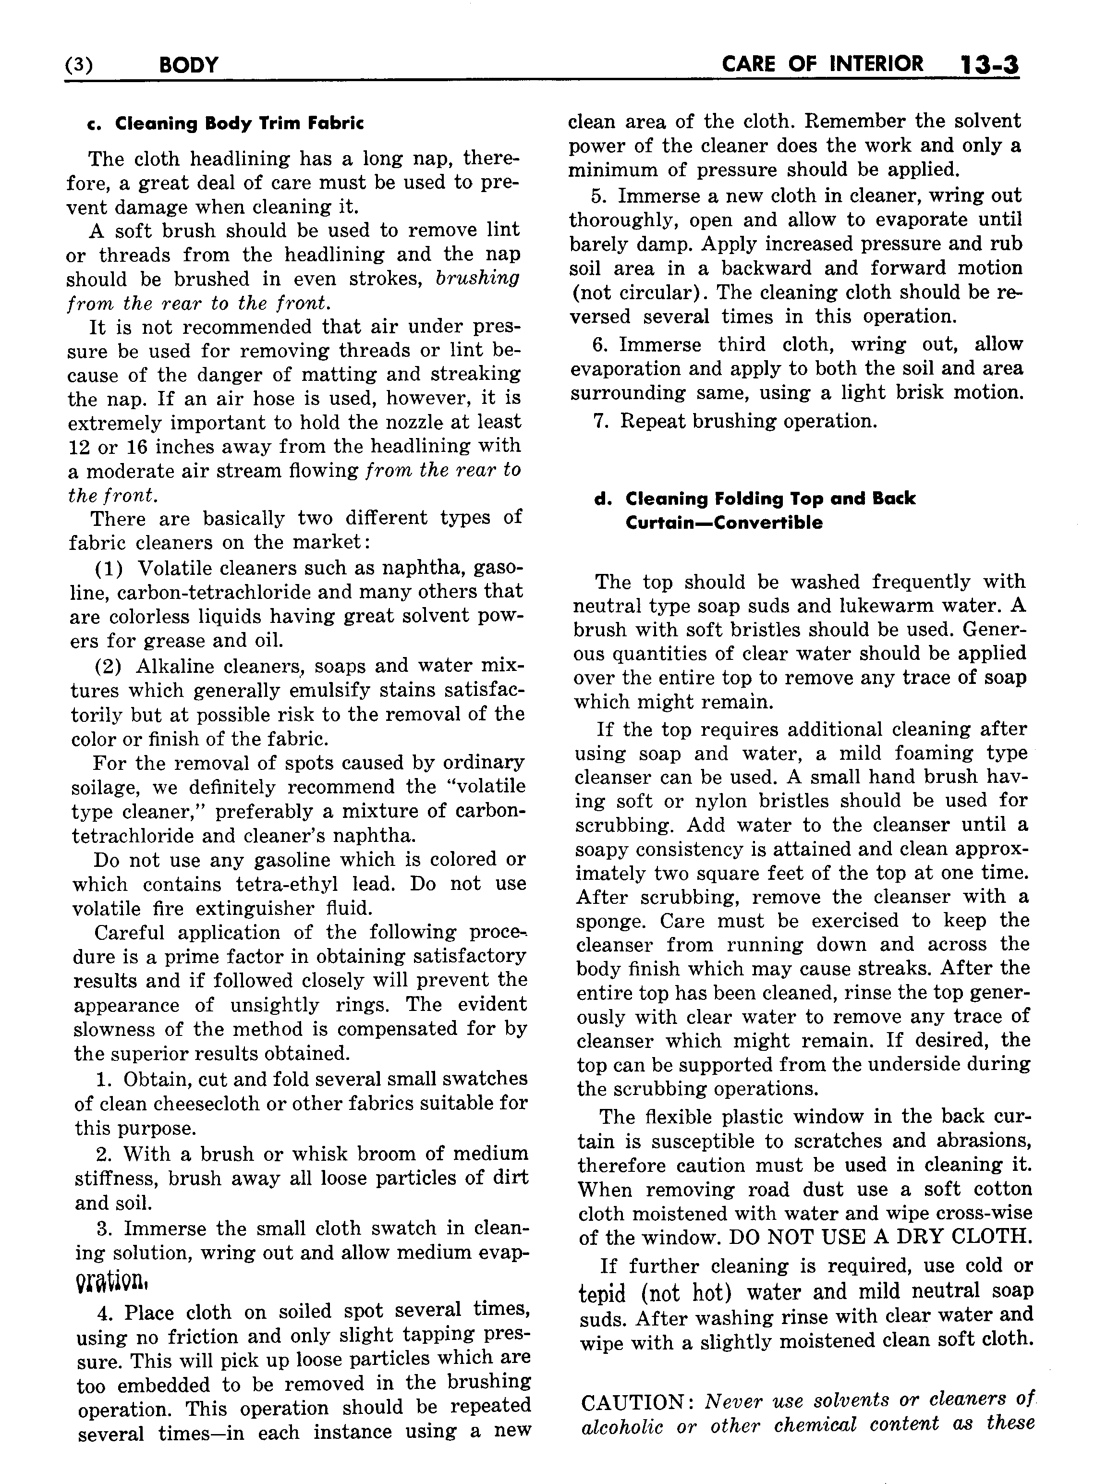 n_1957 Buick Body Service Manual-005-005.jpg